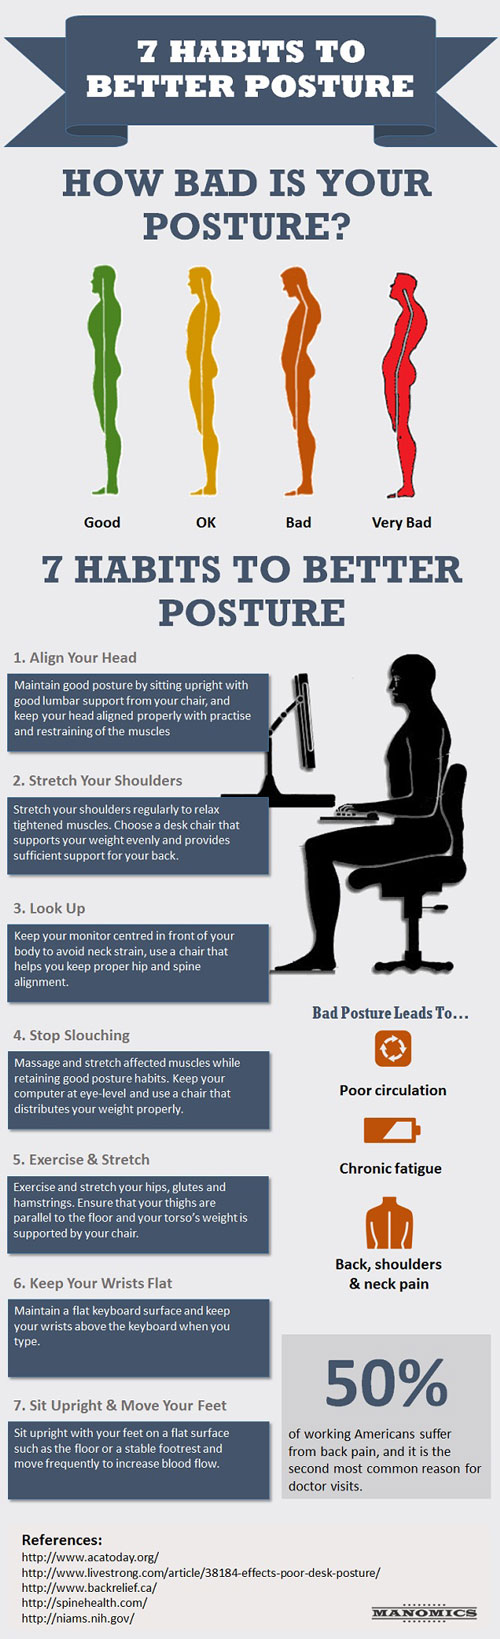 habits-of-posture